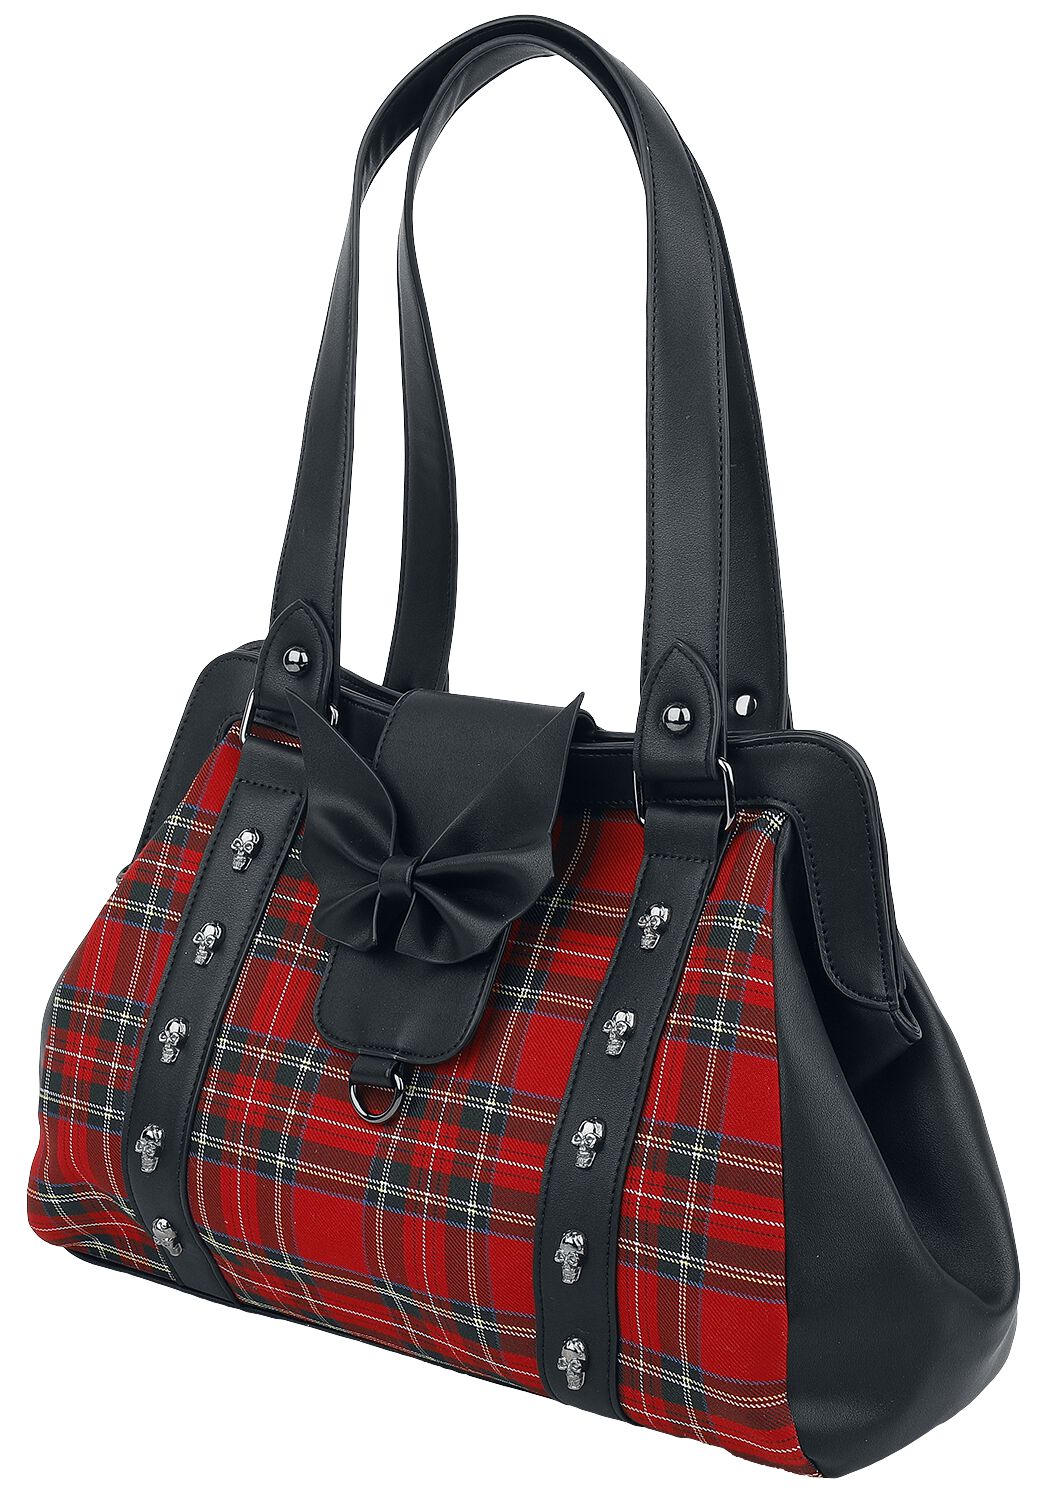 Banned Krampus Handbag black red